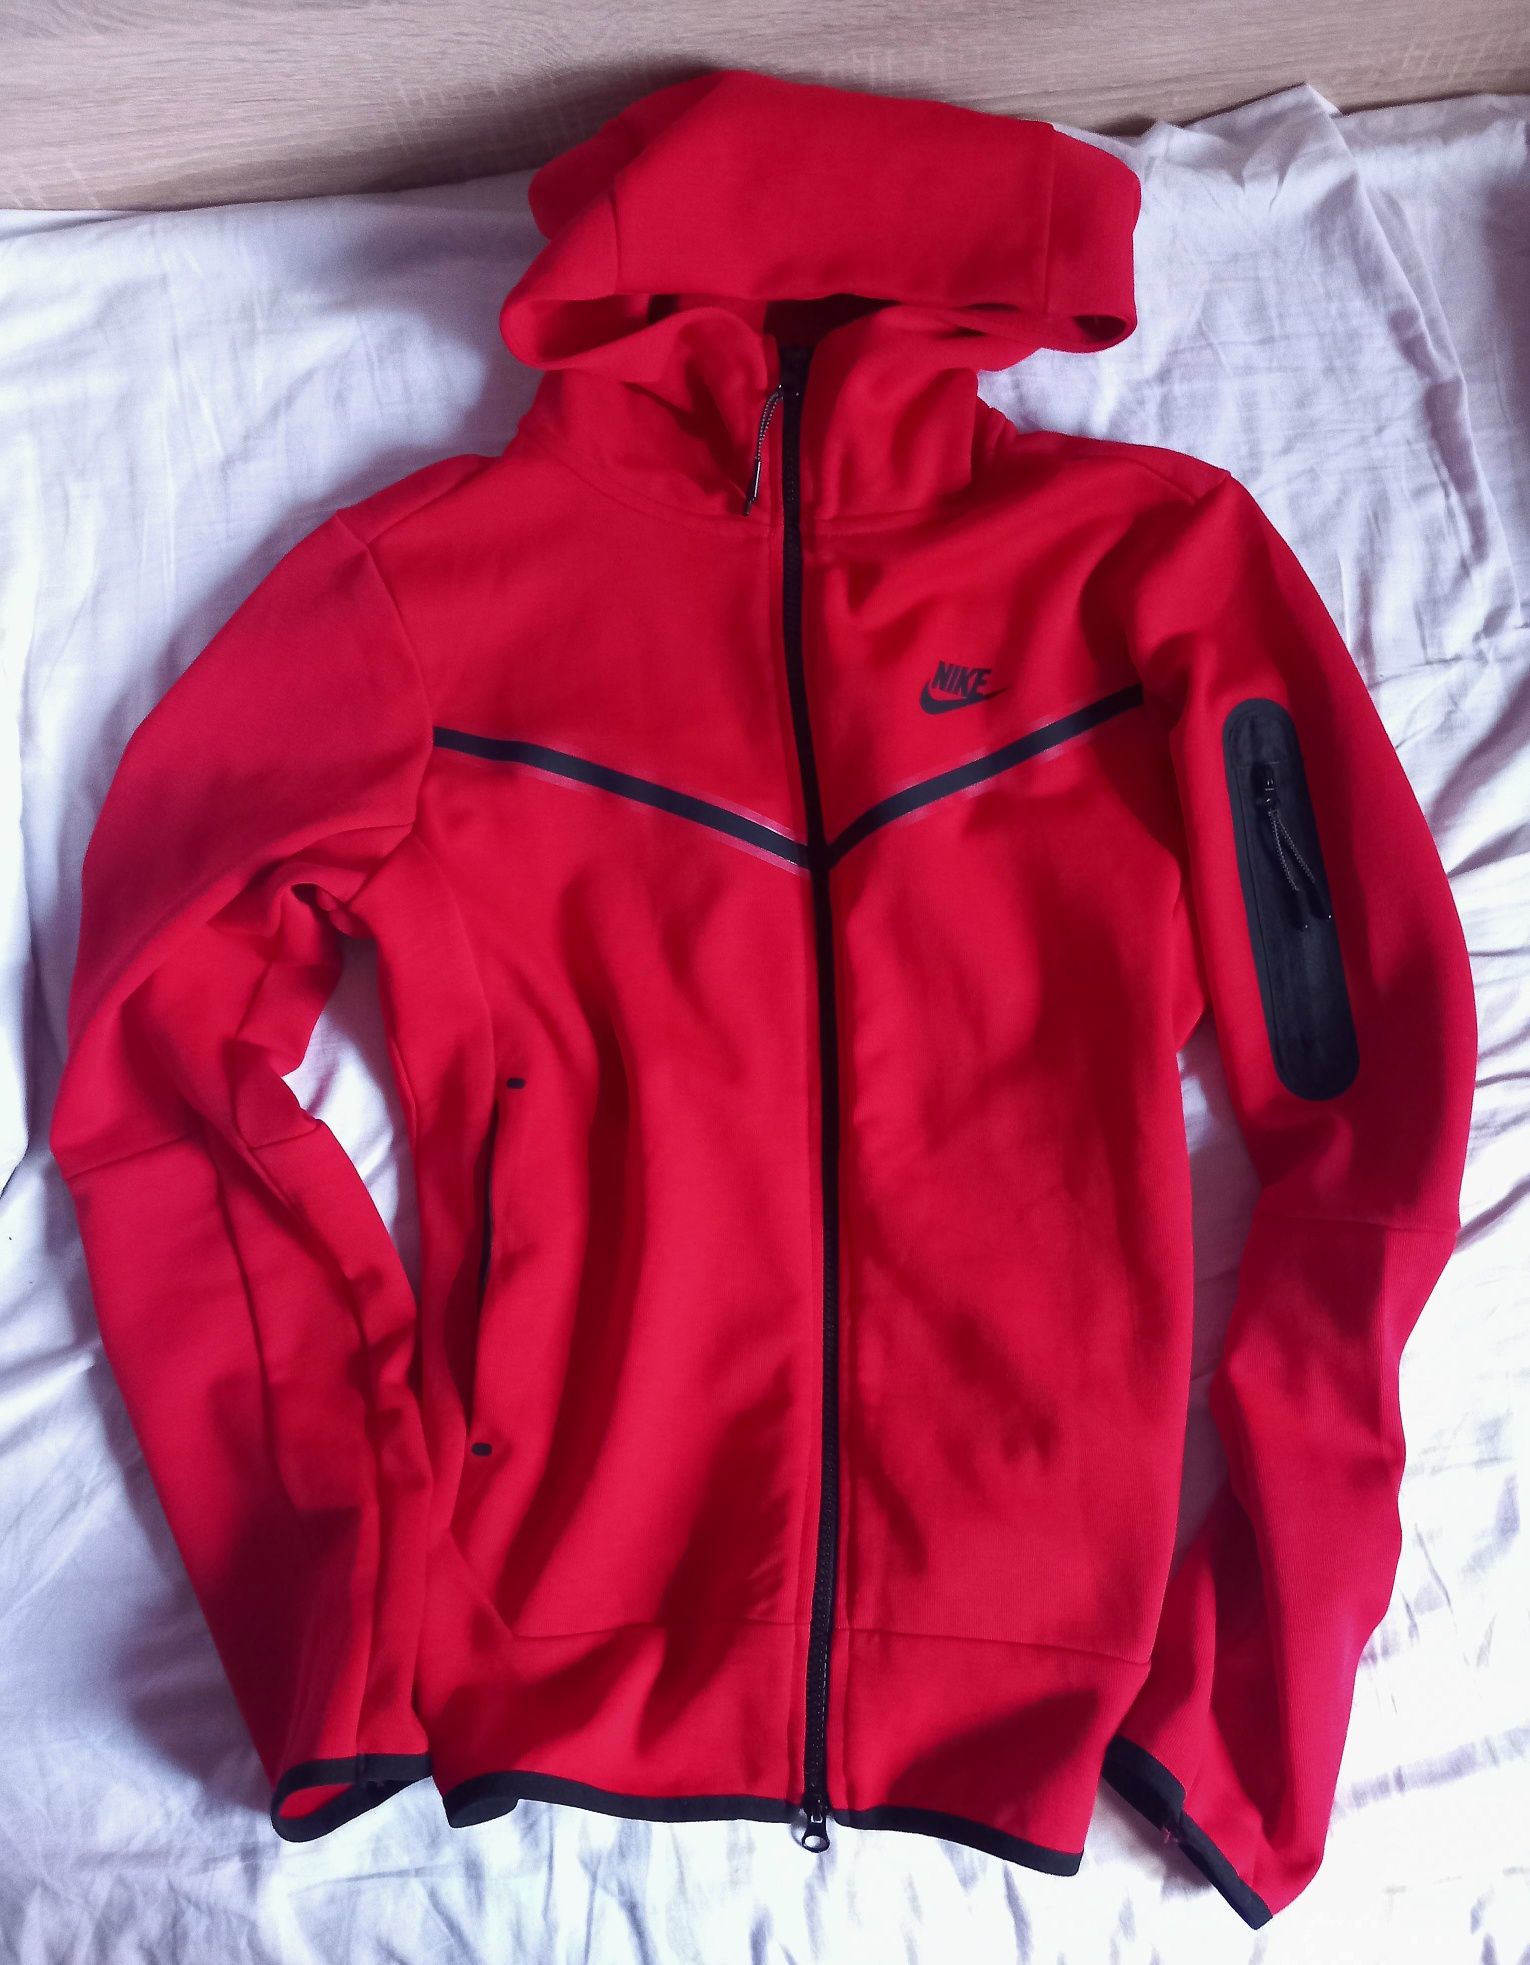 Nike tech fleece (red)